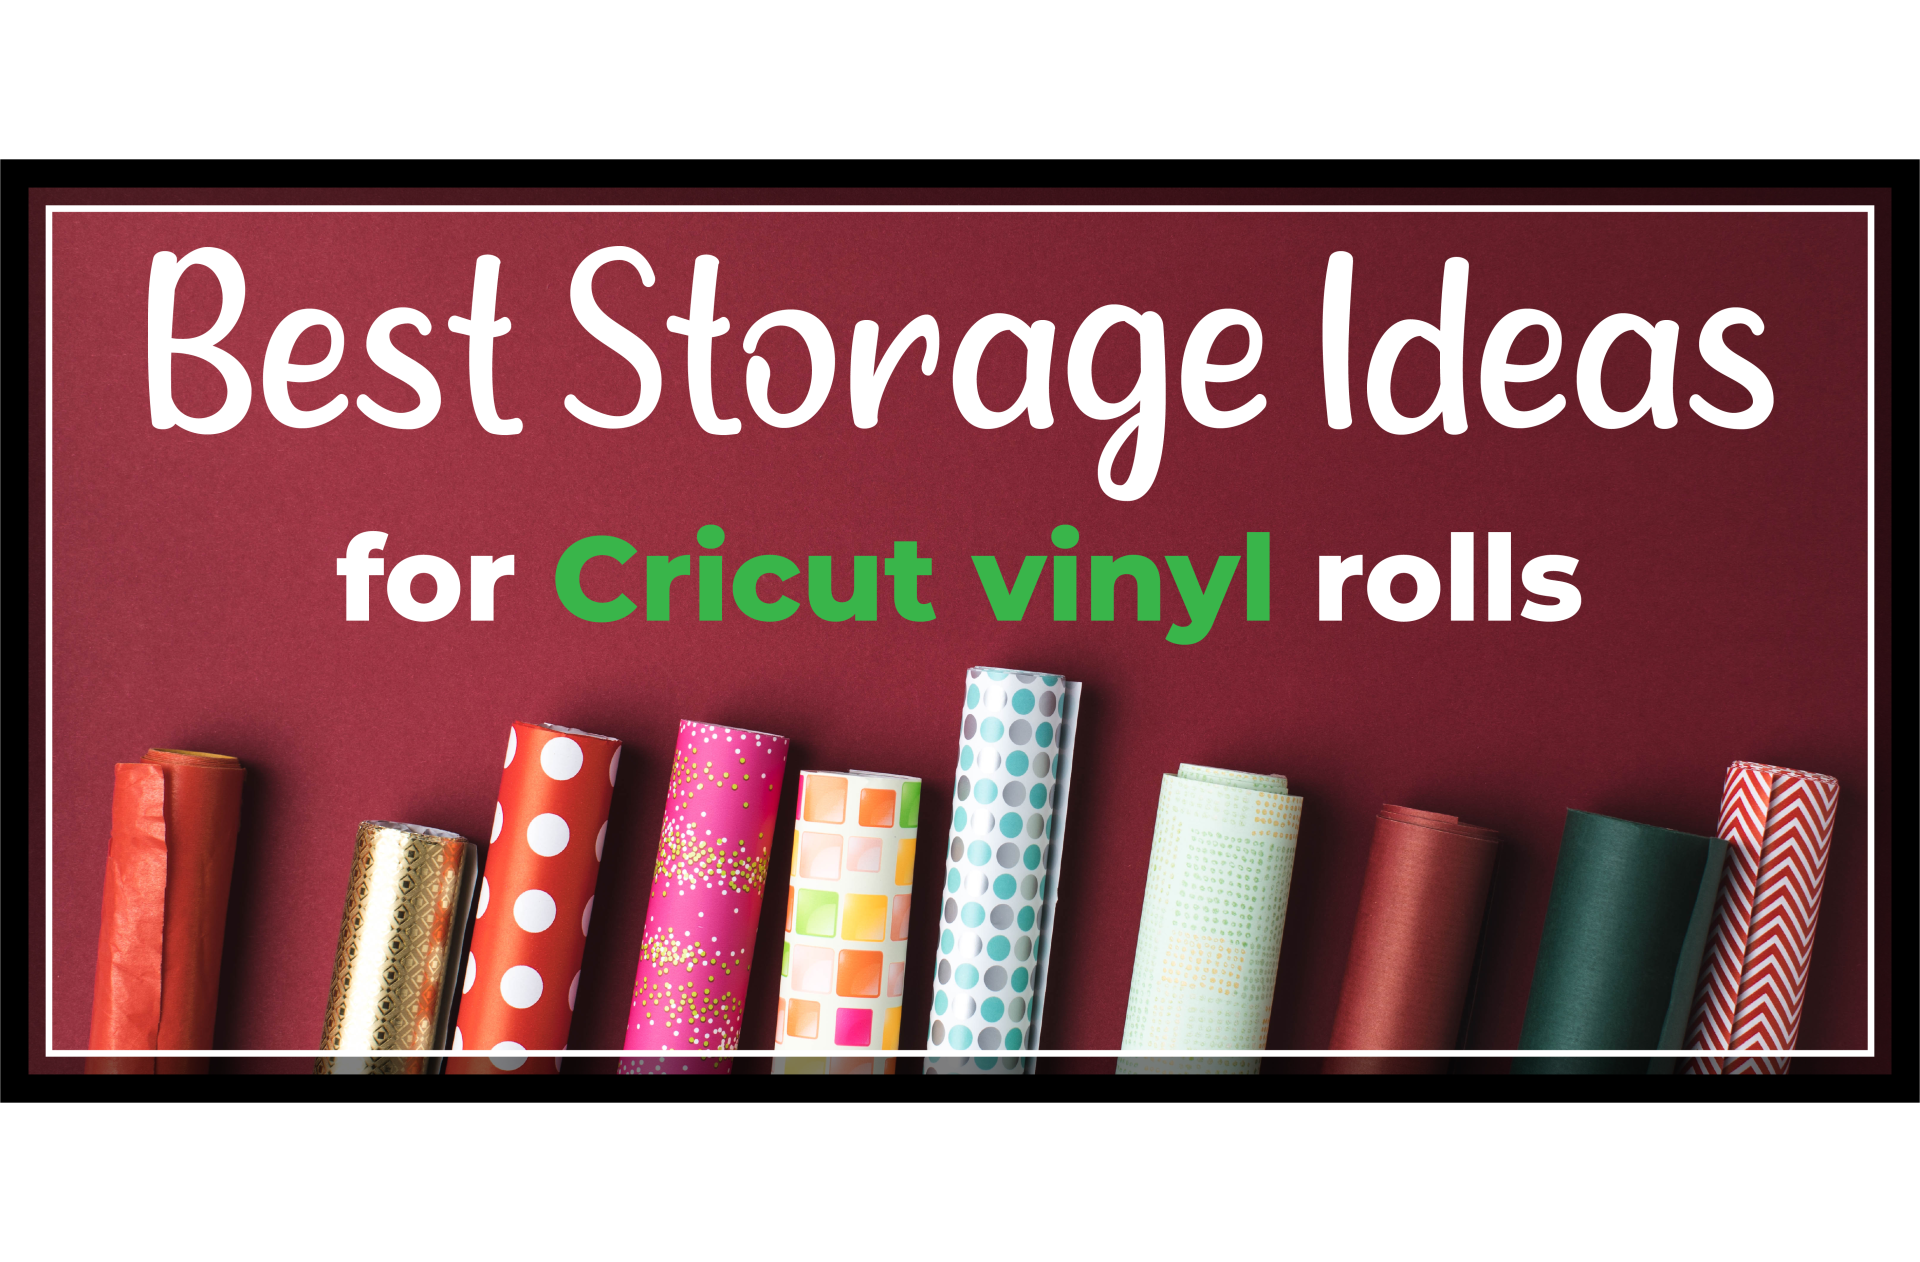 7+ Creative Circuit Vinyl Storage Ideas to Organize Your Space